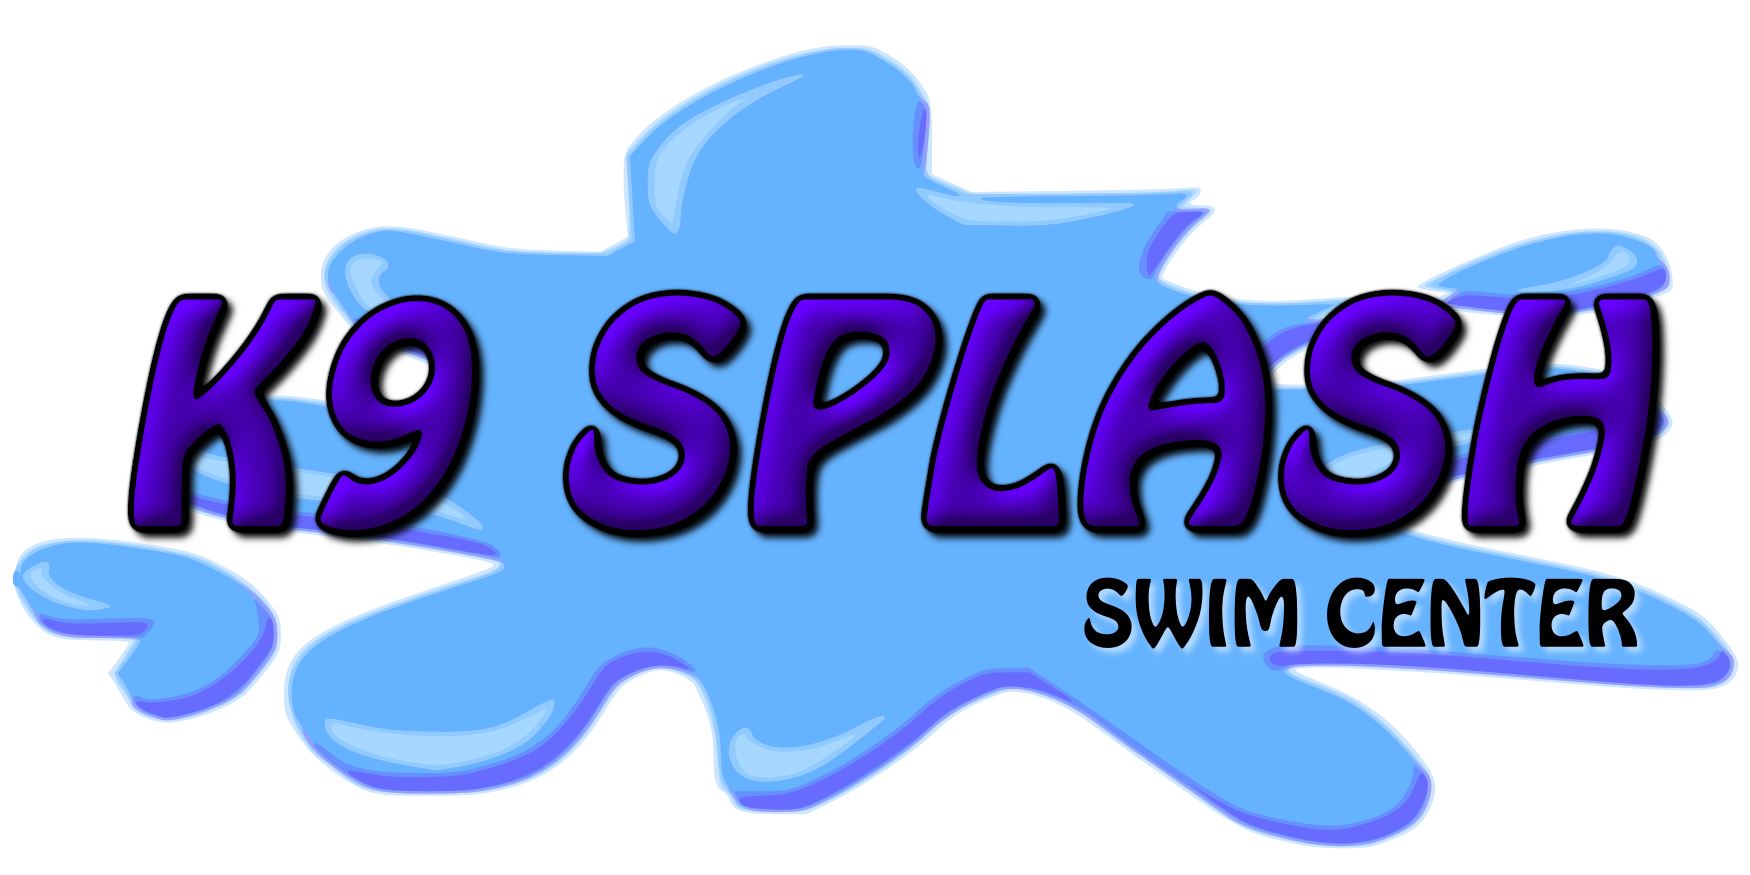 diving clipart splash